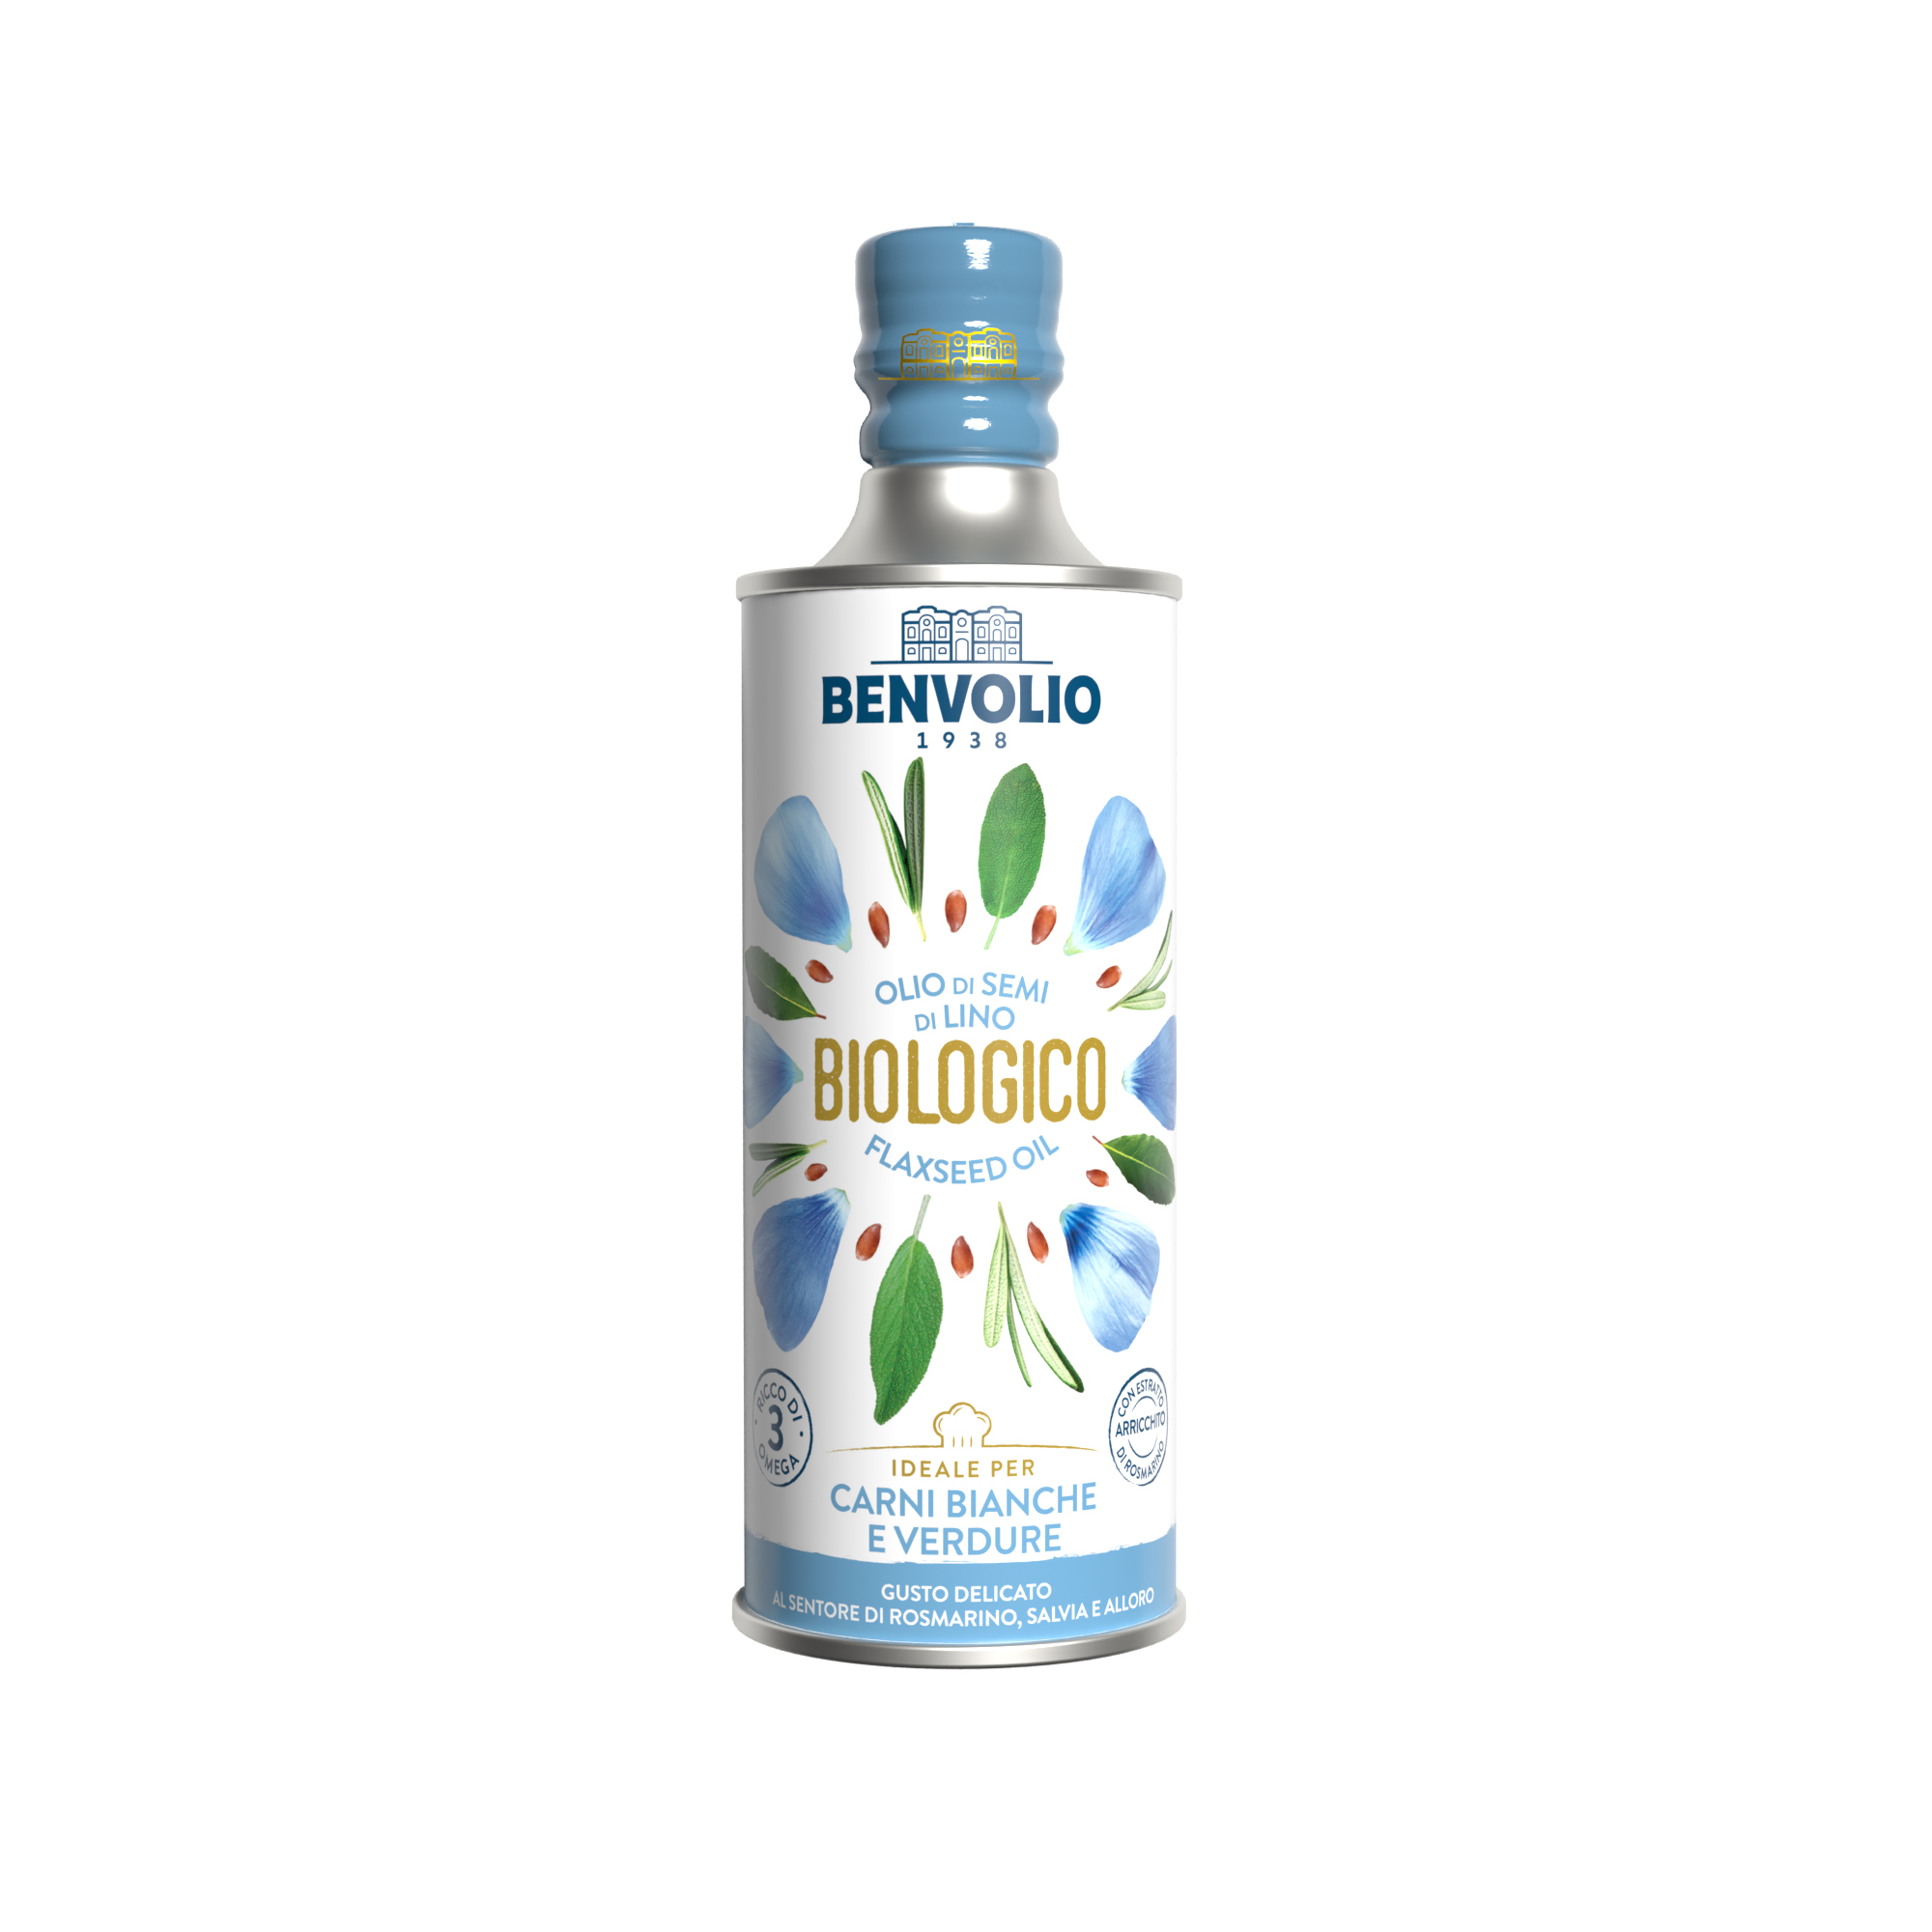 Benvolio 1938 Organic Flexseed Oil 500 ml